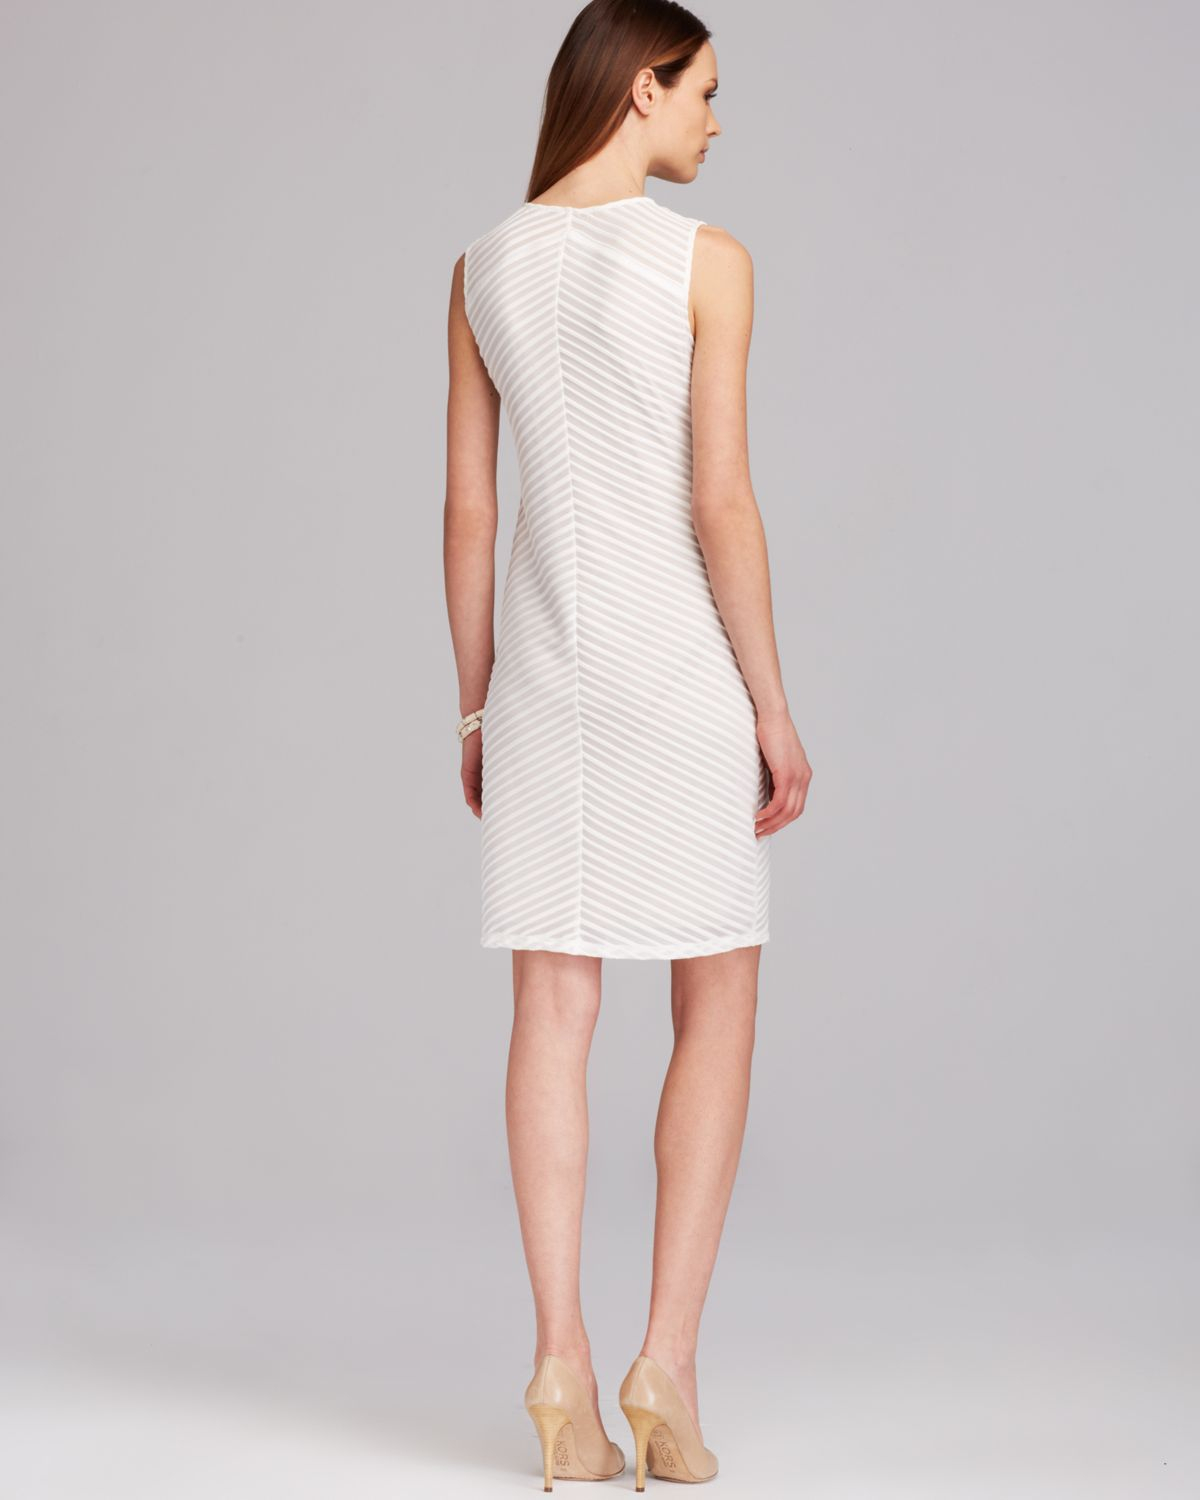 Lyst - Calvin klein Sleeveless Striped Dress in White